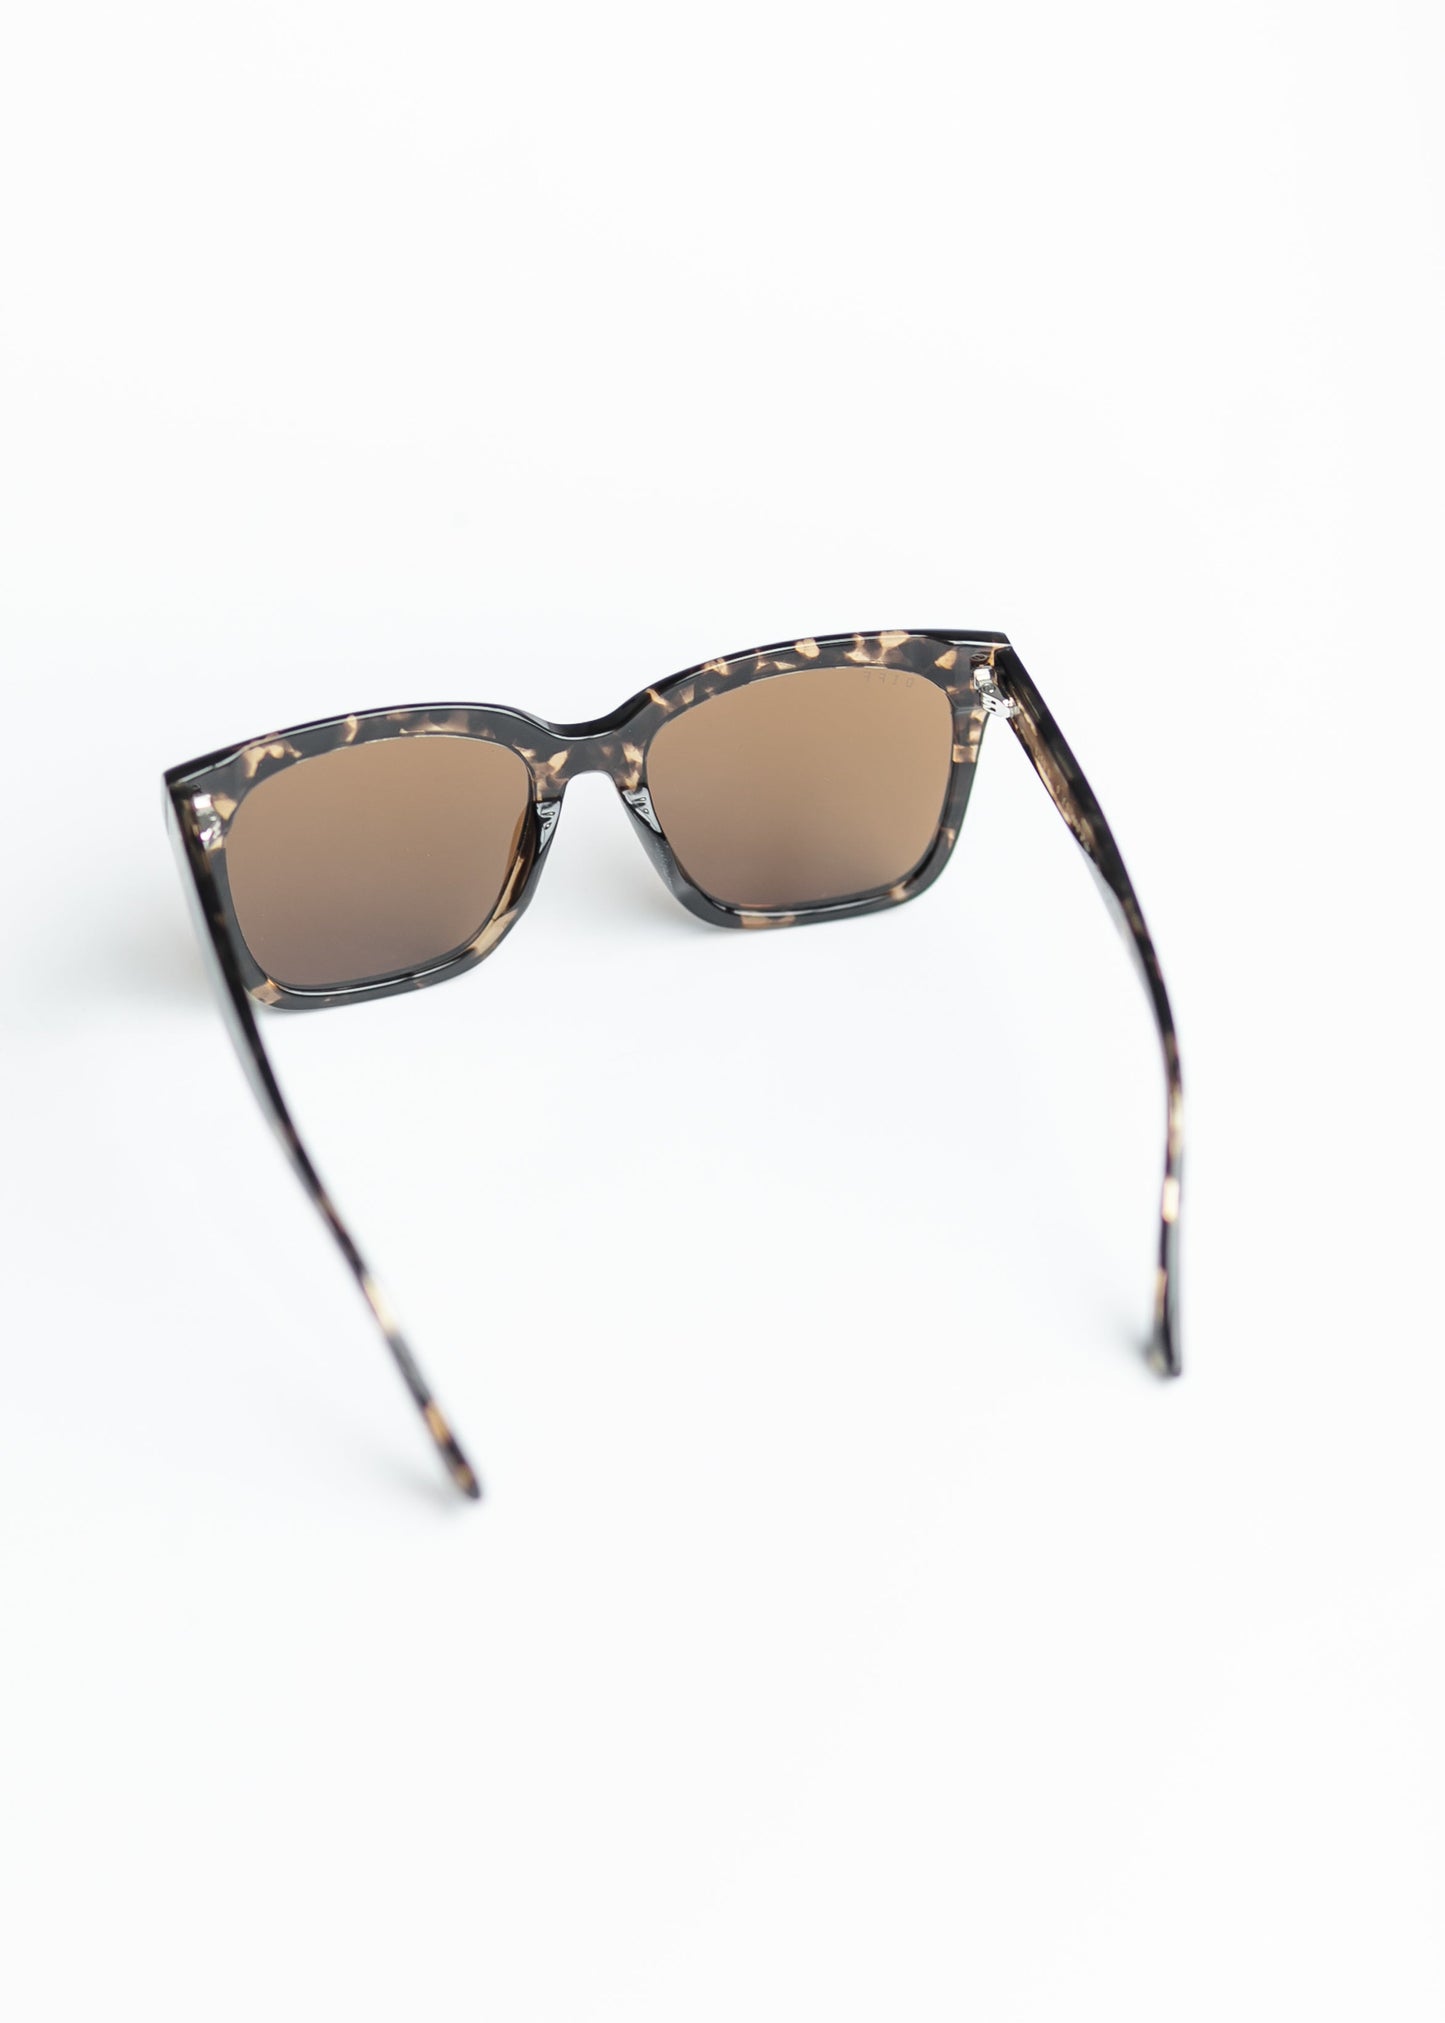 Meredith Espresso Tortoise Polarized Sunglasses Accessories